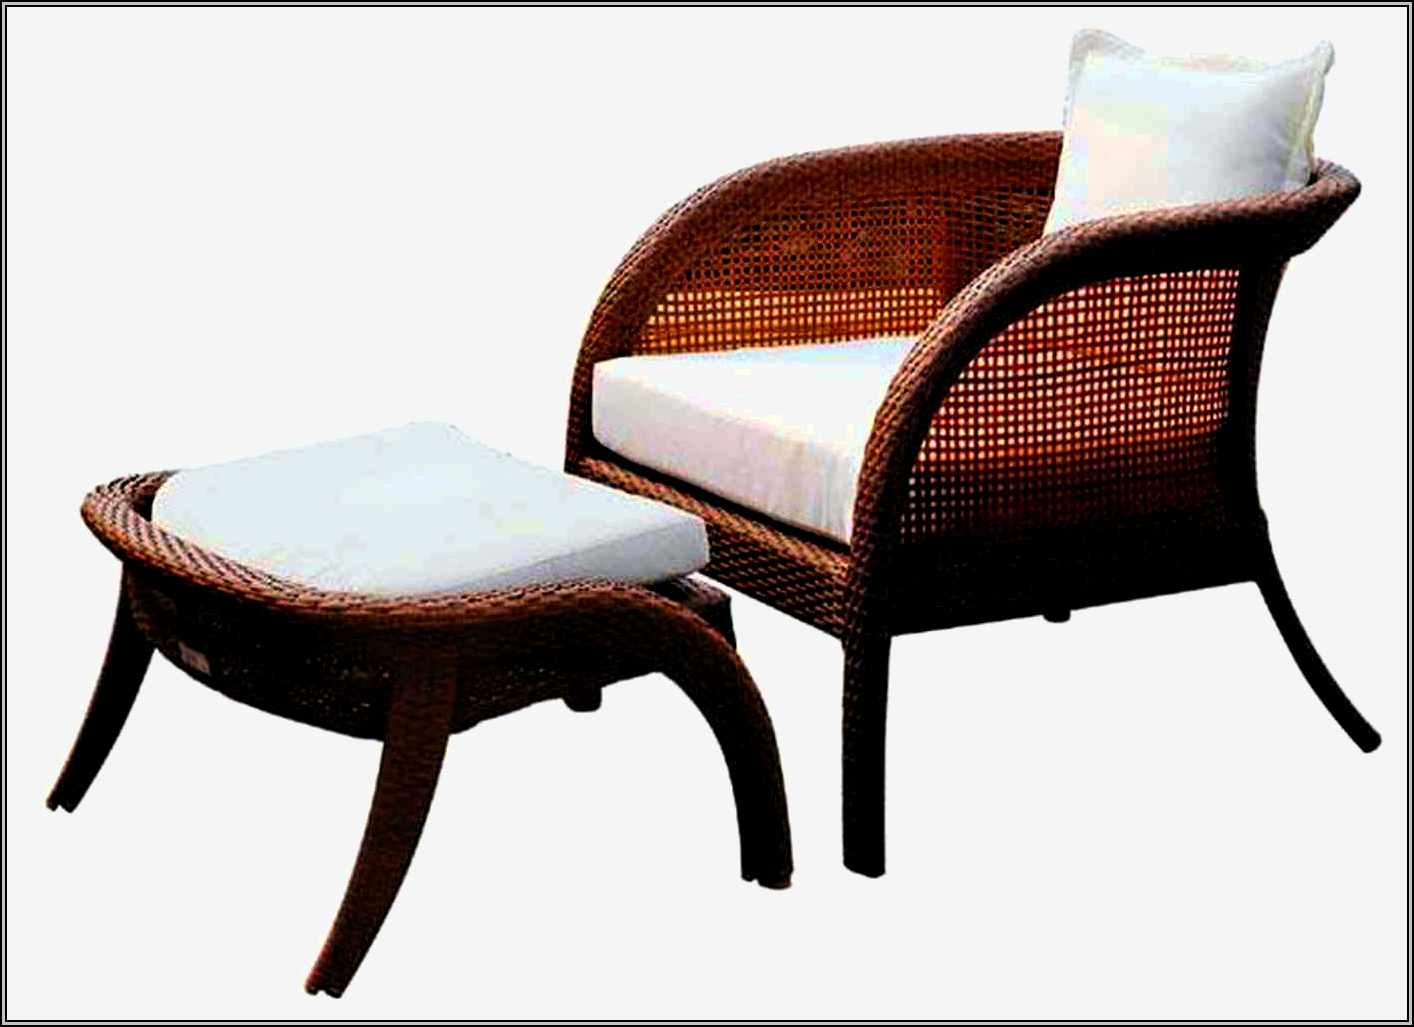 Patio Lounge Chairs Target - Chairs : Home Design Ideas #6zDAVlwQbx2307